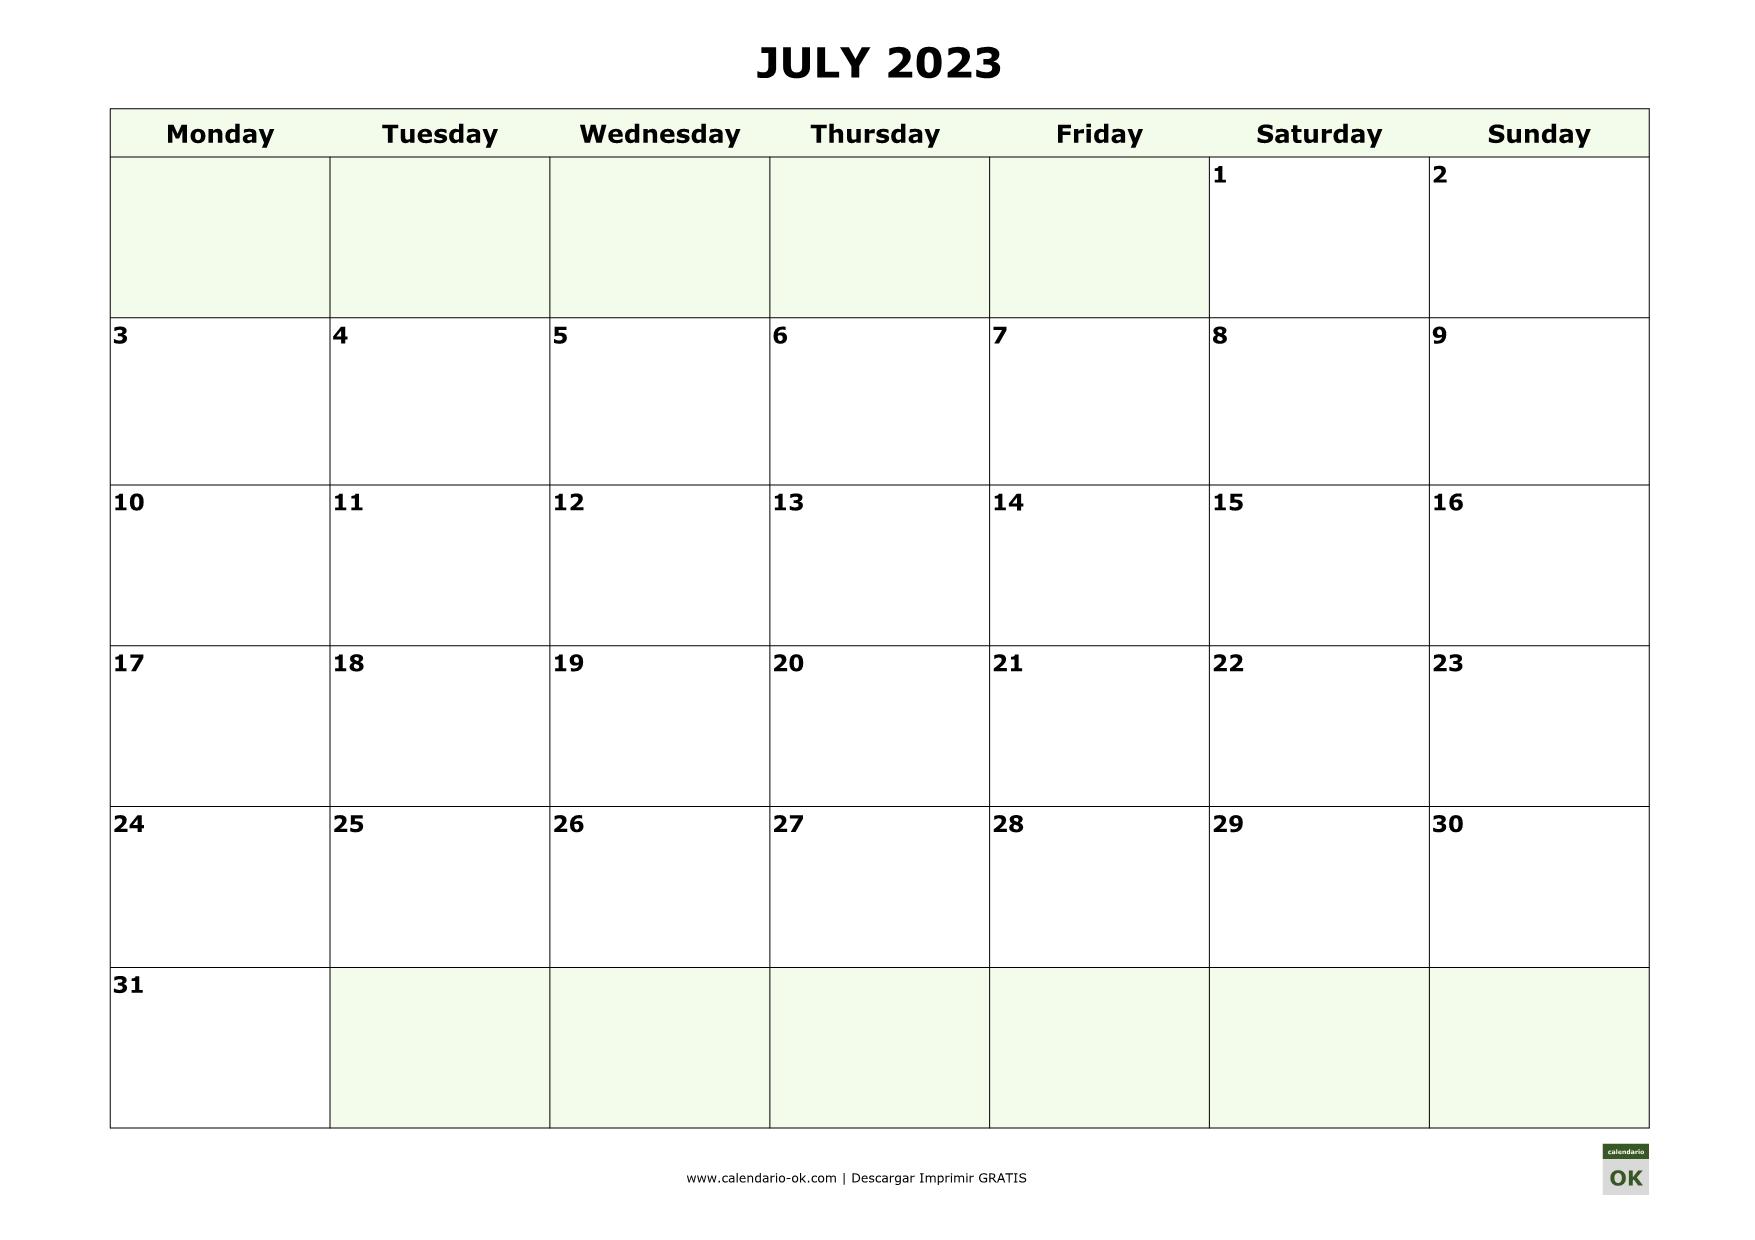 JULIO 2023 calendario en INGLES